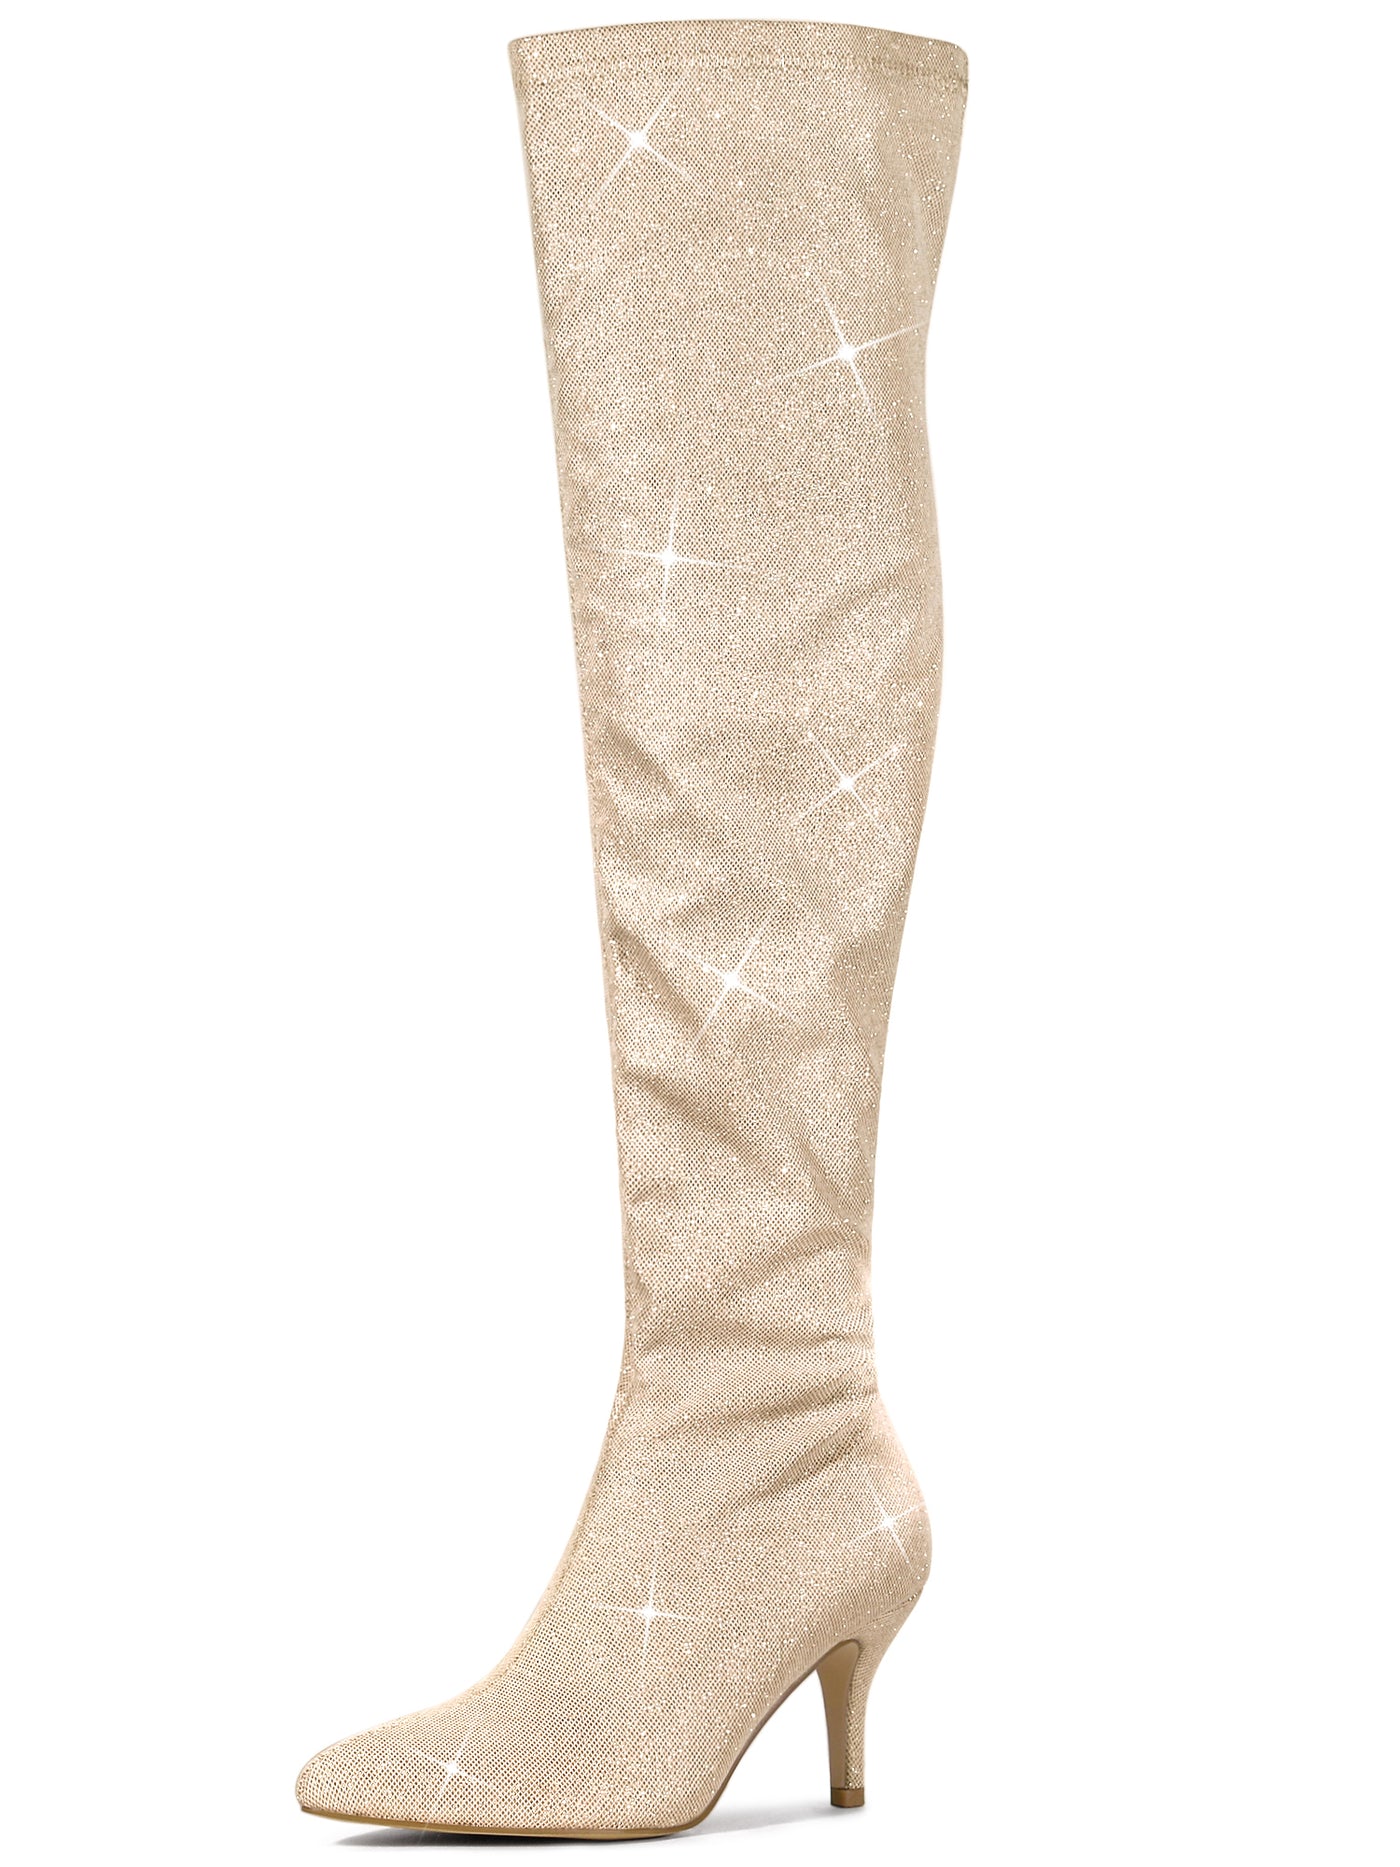 Allegra K Glitter Pointed Toe Stiletto Heel Over the Knee High Boot